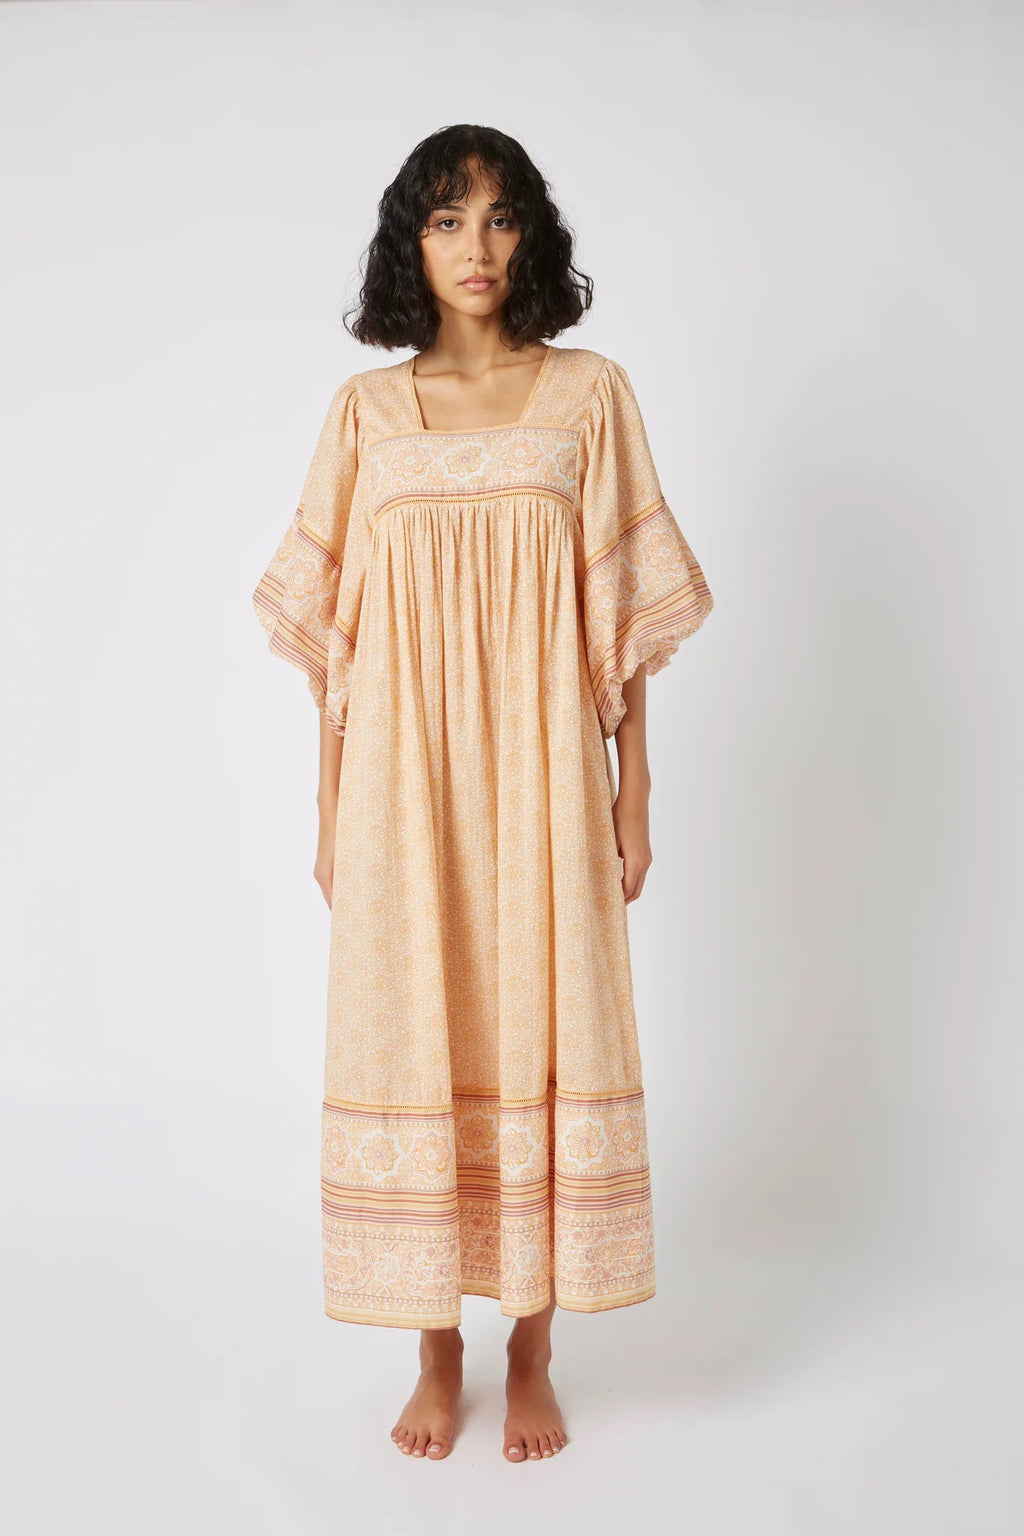 SS24 Faune Meadow Tuscan Peach Dress - The Mercantile London